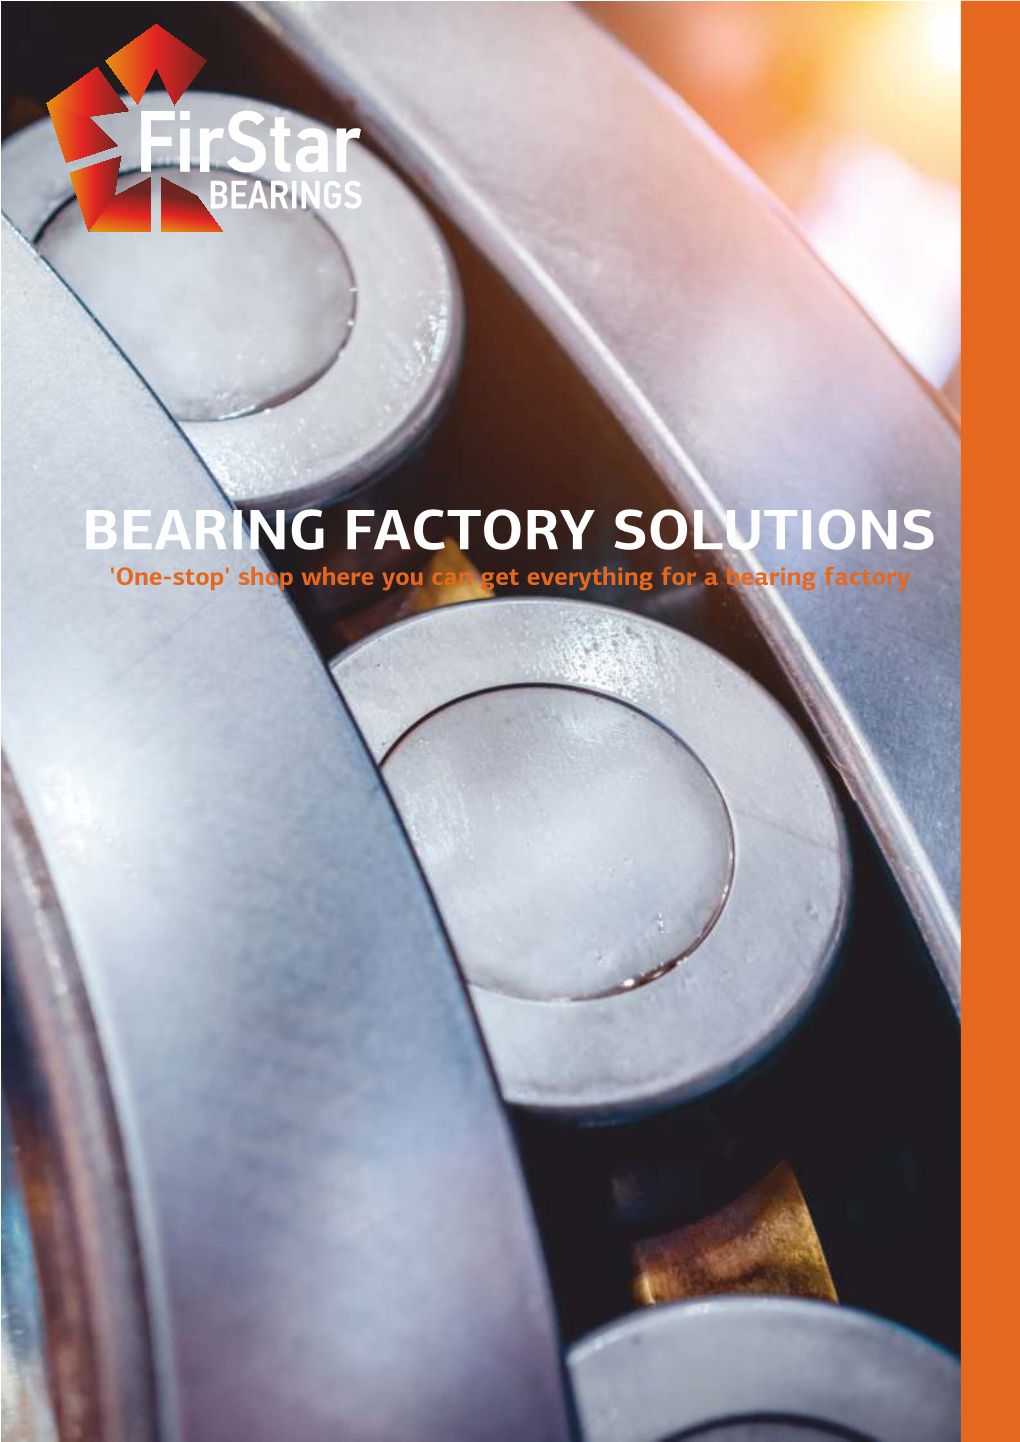 Firstar Bearing Factory Solutions